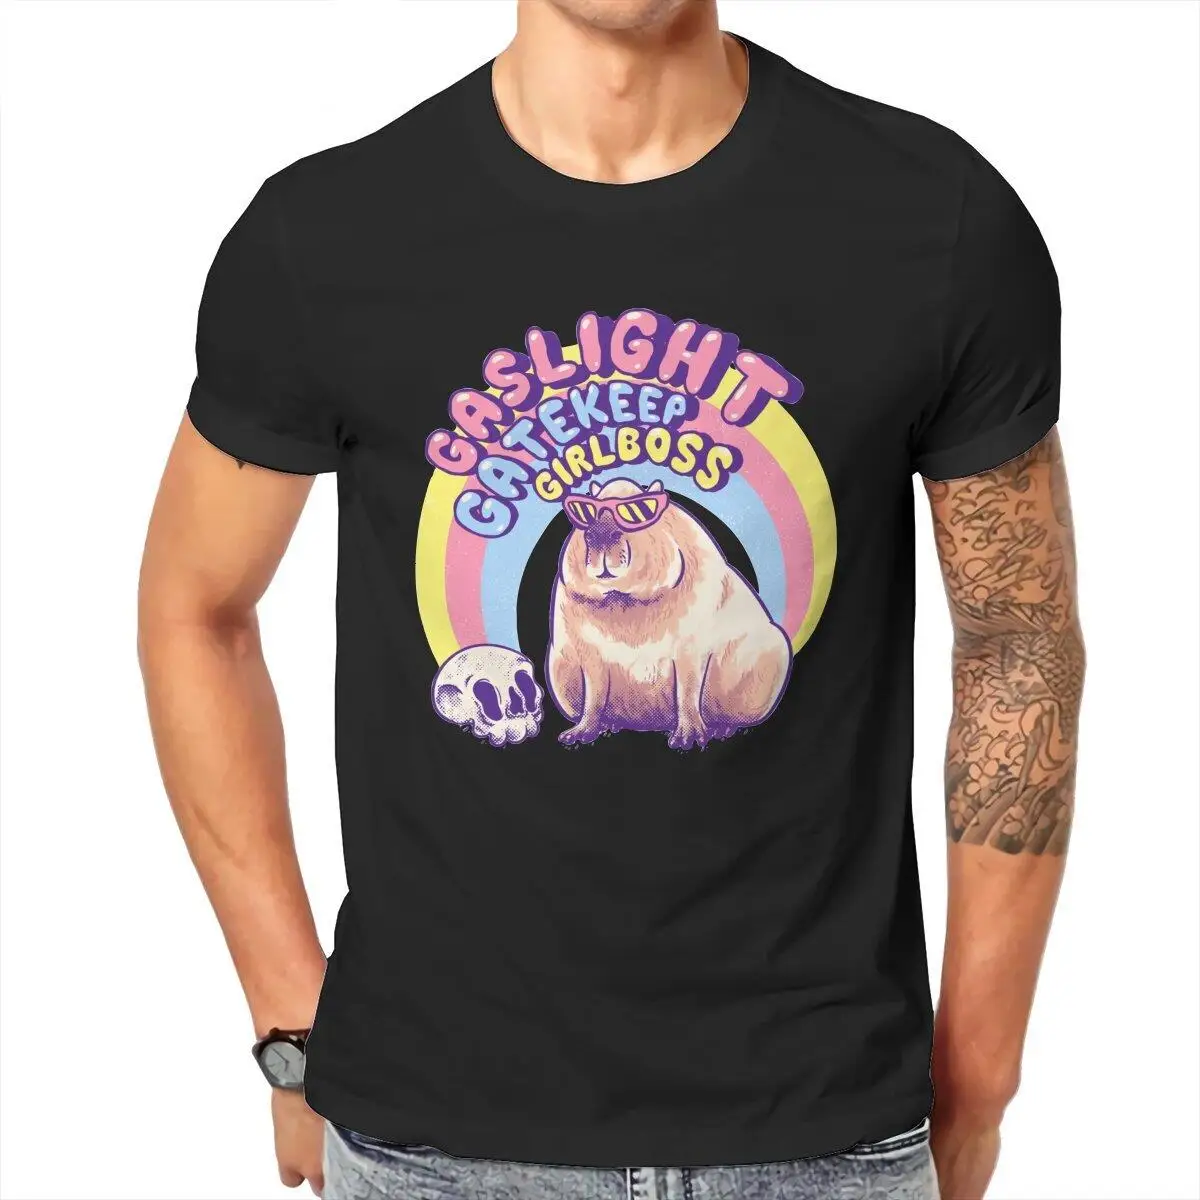 Girlboss Capybara Skull  Men's T Shirt  Casual Tee Shirt Short Sleeve Crewneck T-Shirt Cotton Unique Clothing